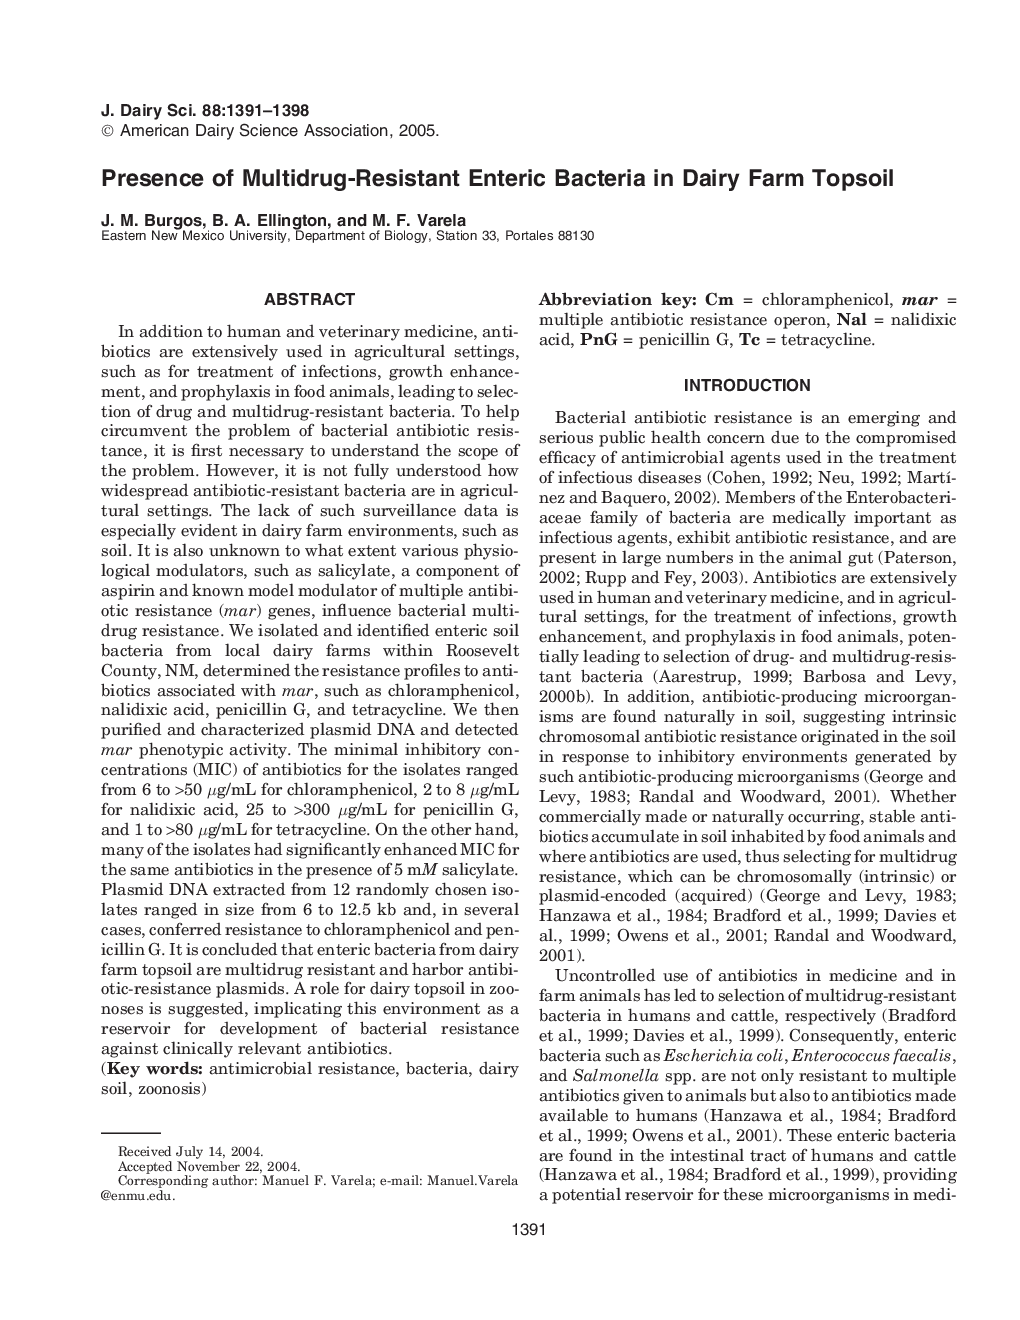 Presence of Multidrug-Resistant Enteric Bacteria in Dairy Farm Topsoil